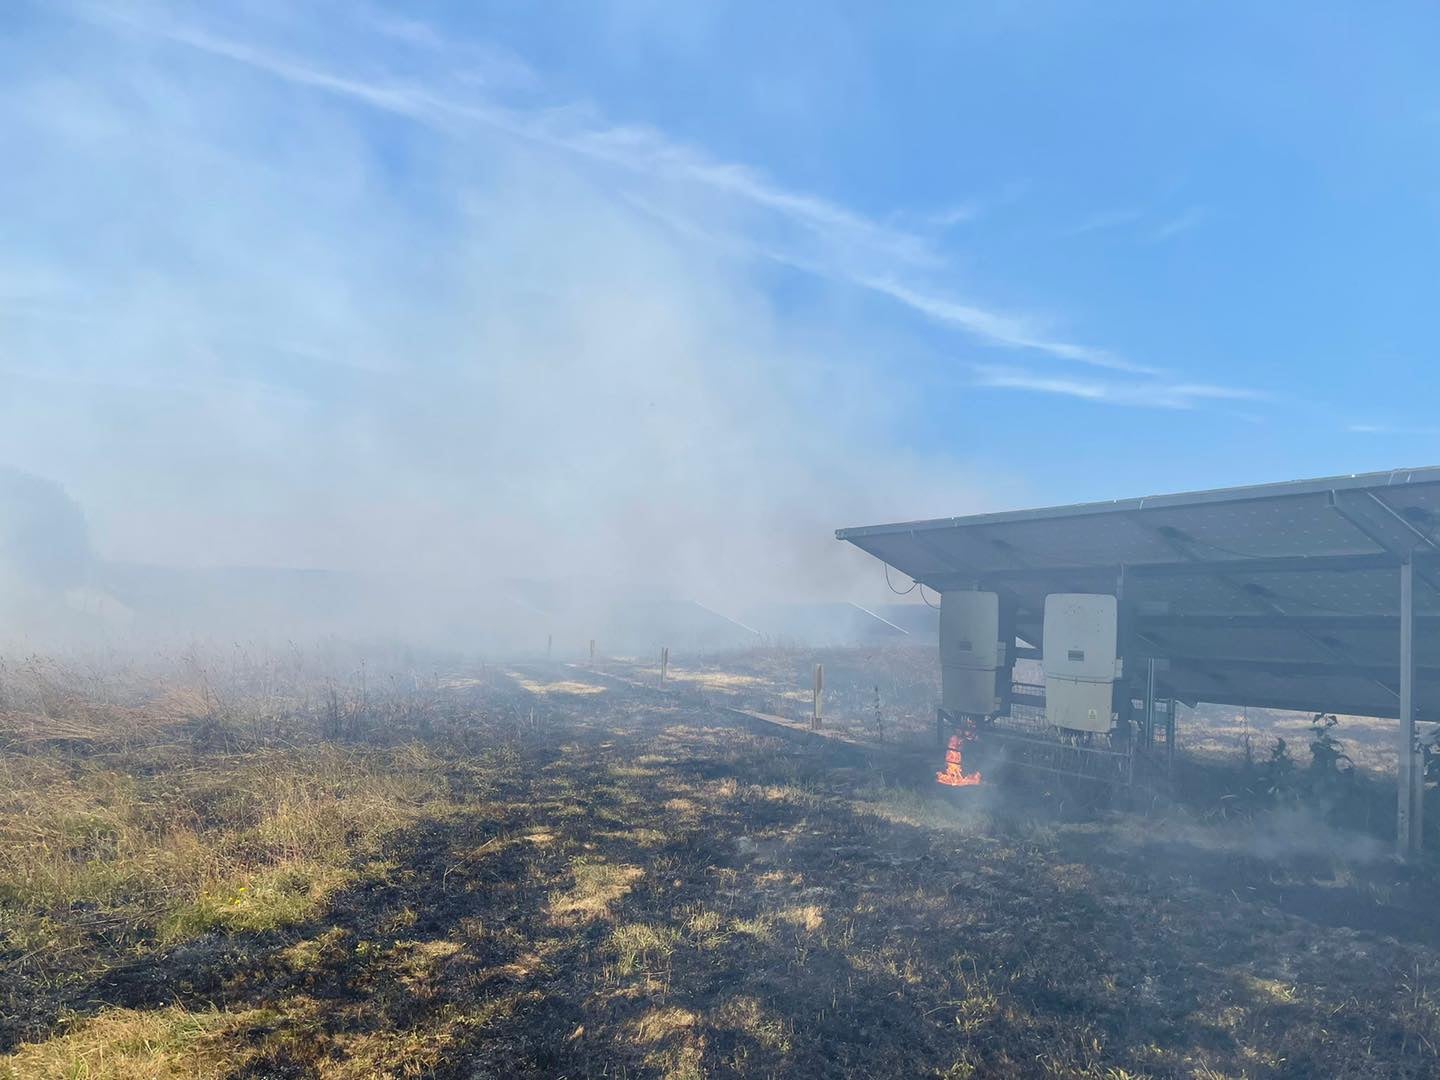 A solar panel farm ablaze in Verwood, Dorset